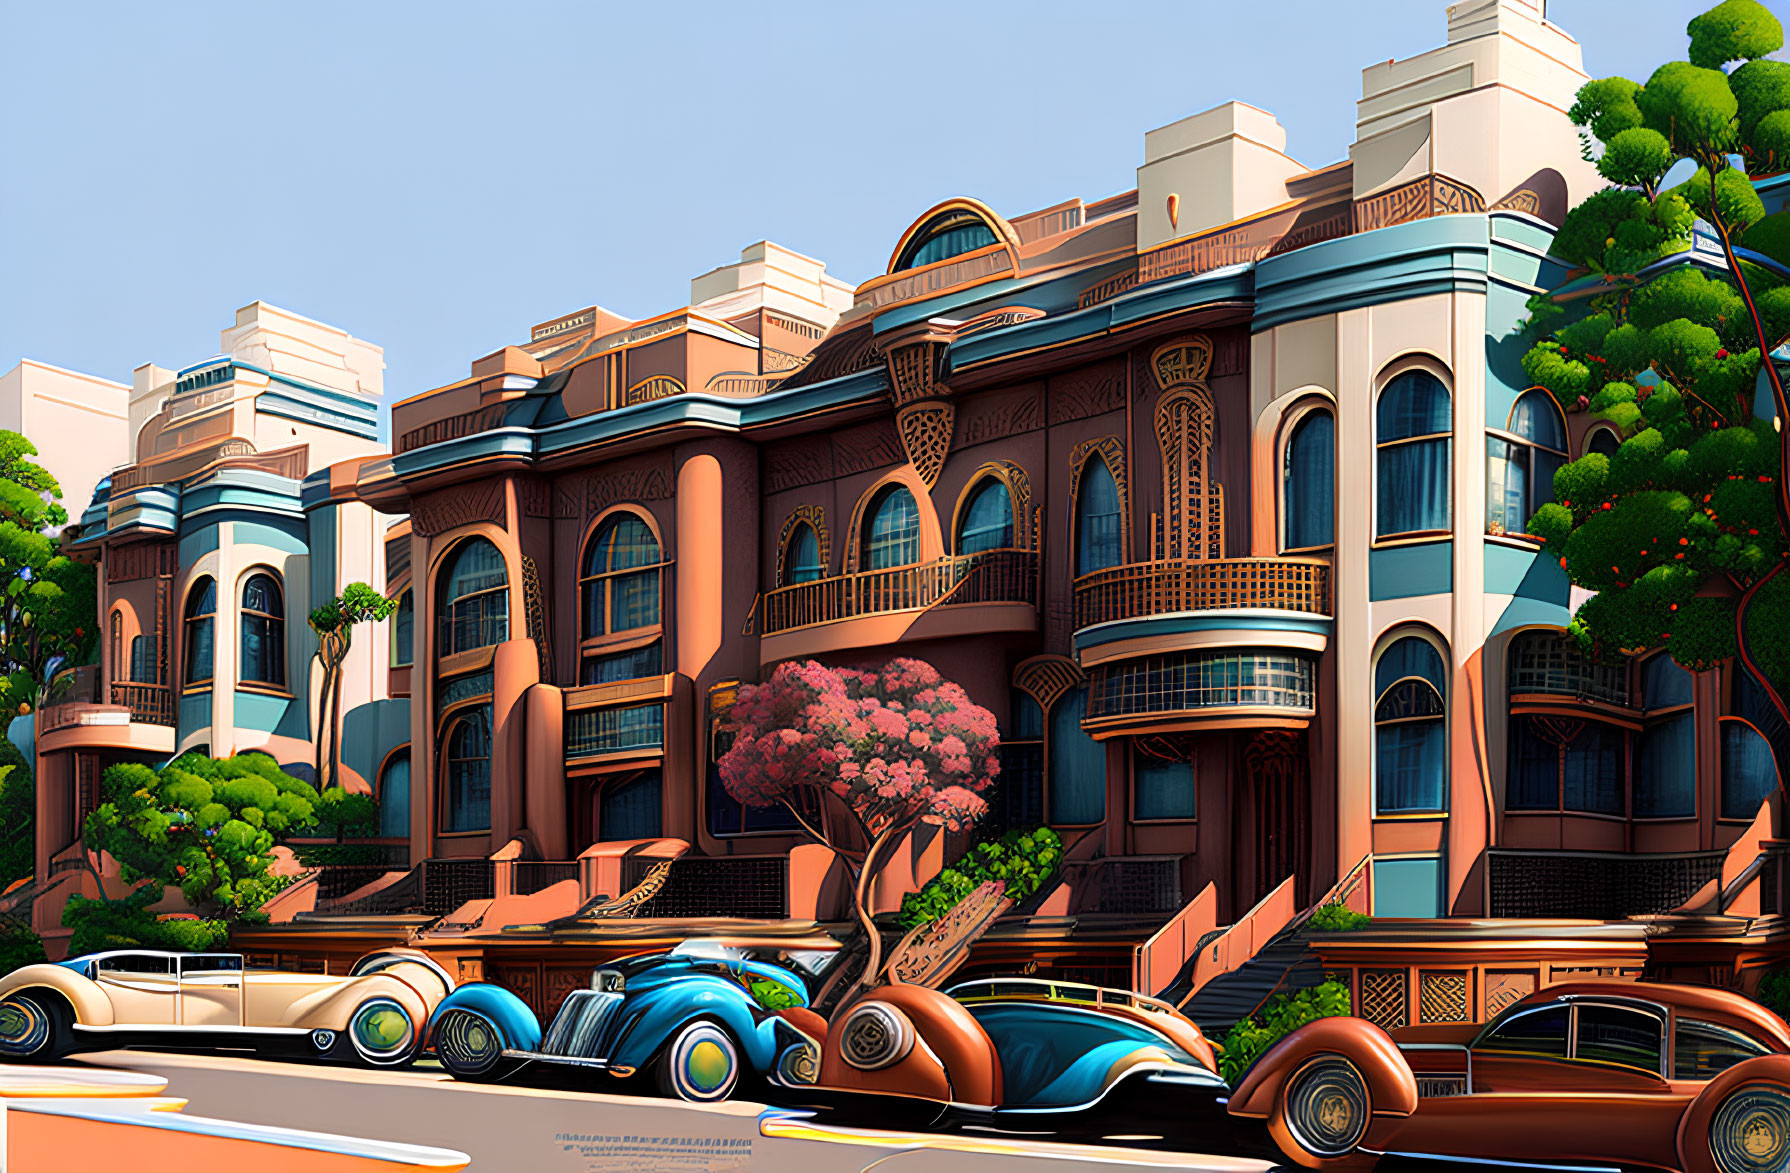 Vibrant Art Deco Architecture with Pastel Colors & Classic Cars